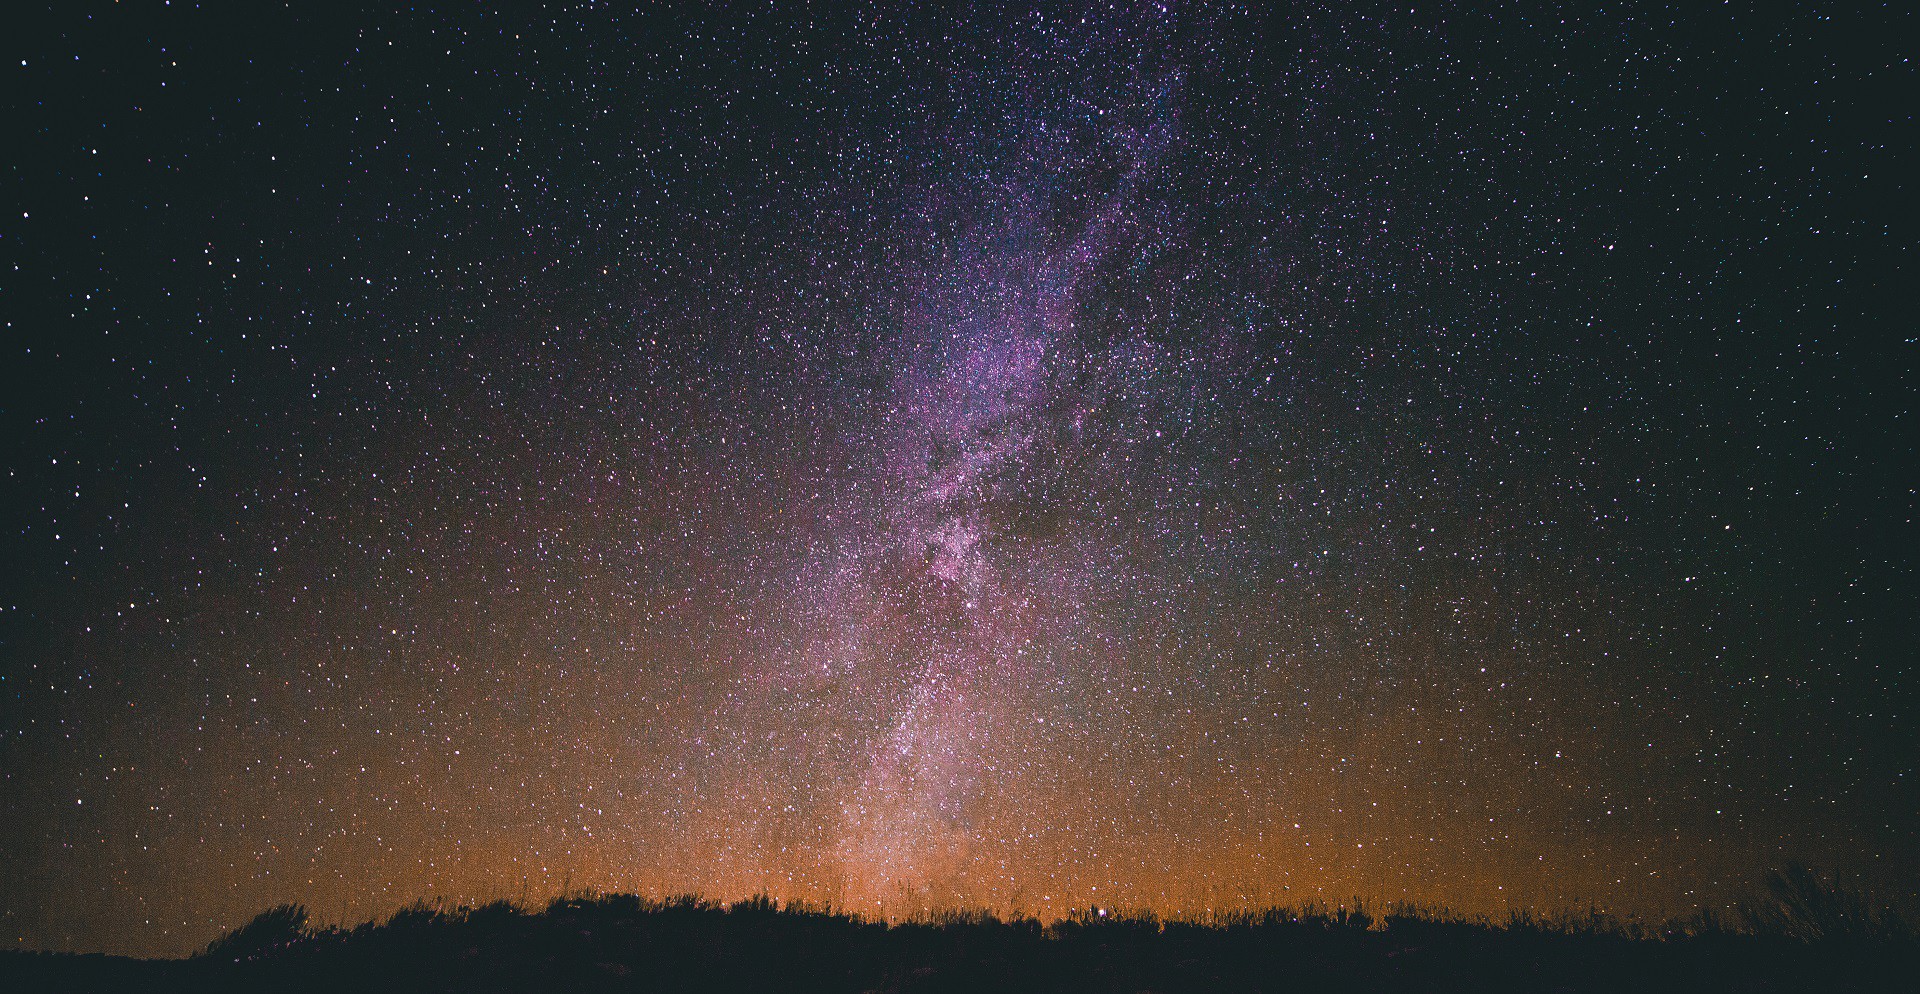 General 1920x994 landscape stars starry night skyscape Milky Way starred sky night sky